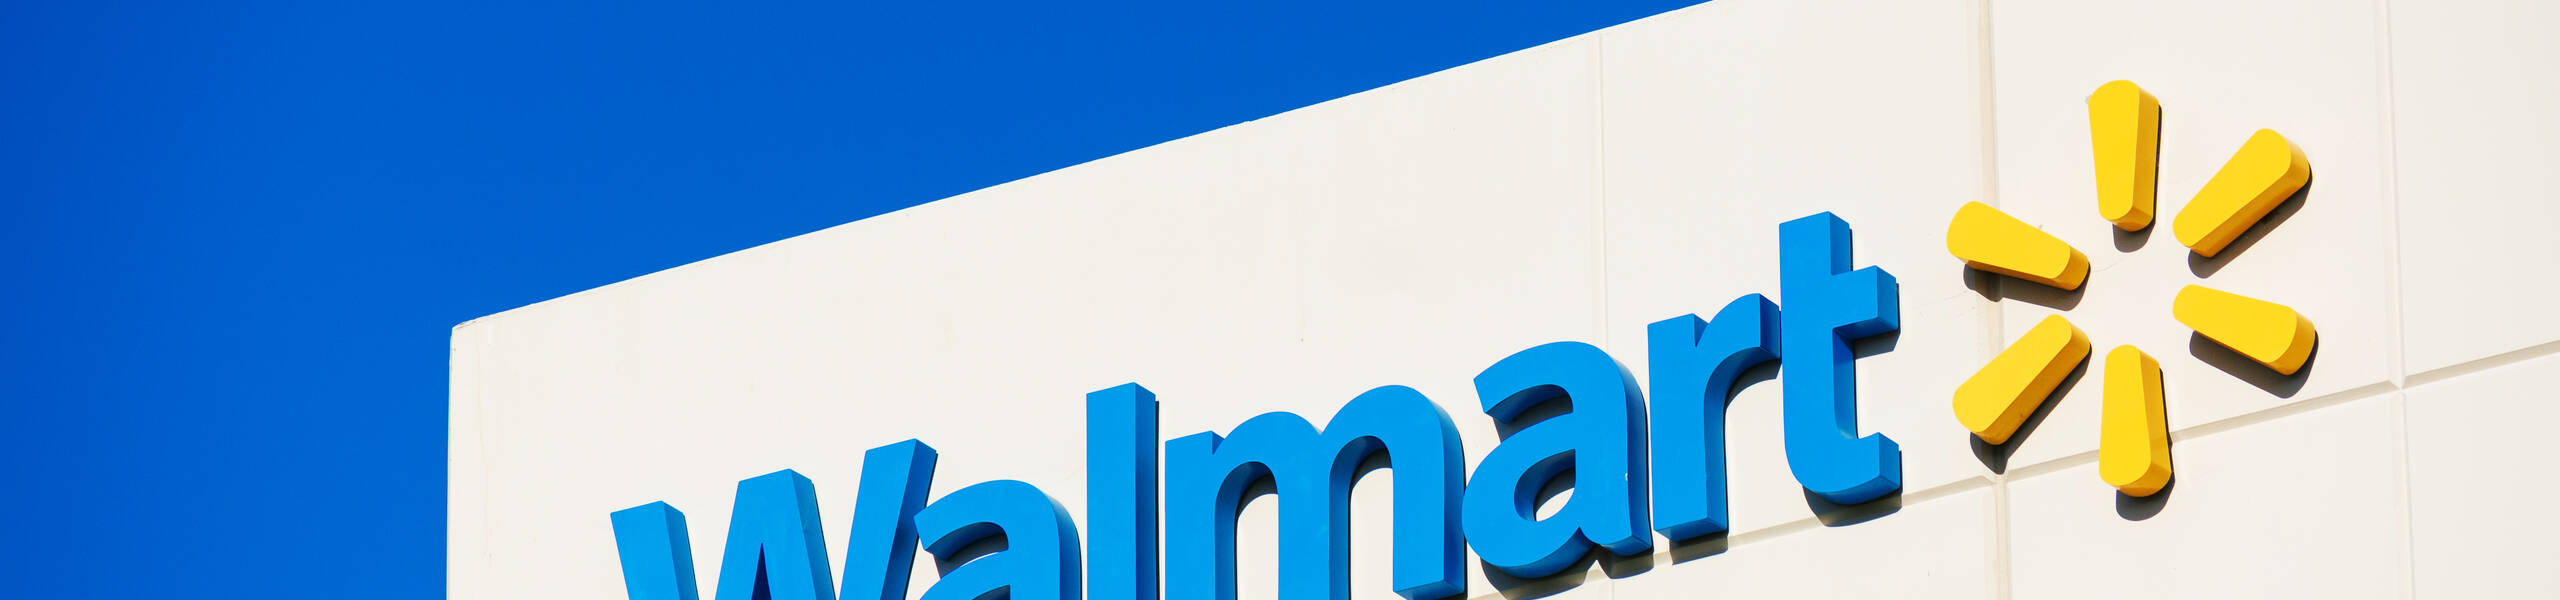 Walmart akan Mengumumkan Laporan Pendapatan pada 17 Februari